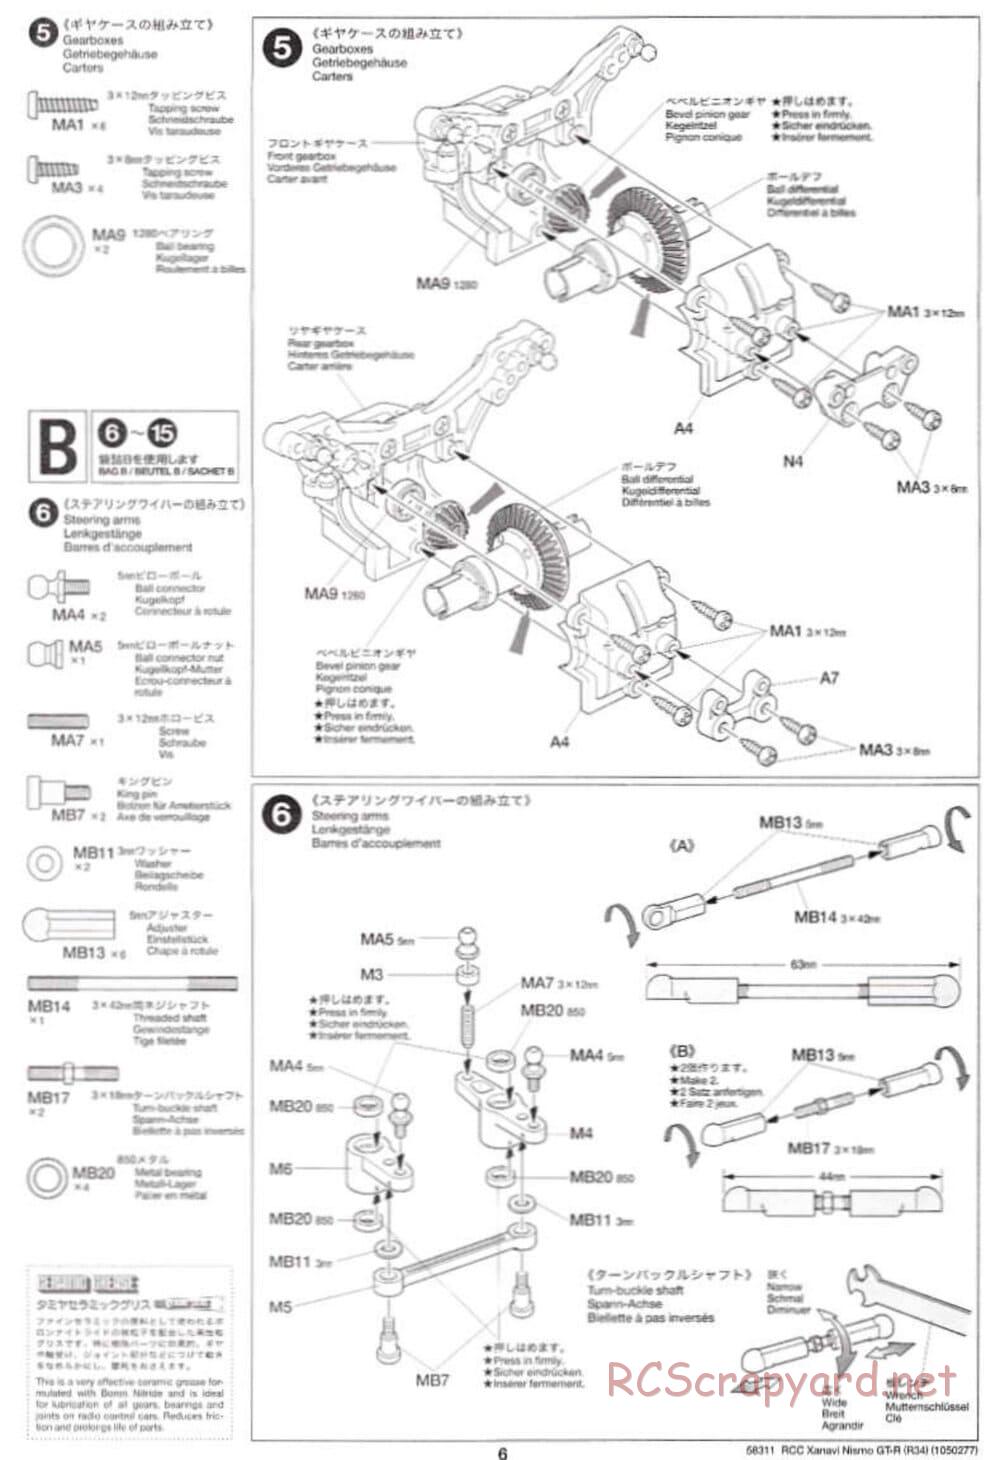 Tamiya - Xanavi Nismo GT-R (R34) - TB-02 Chassis - Manual - Page 6